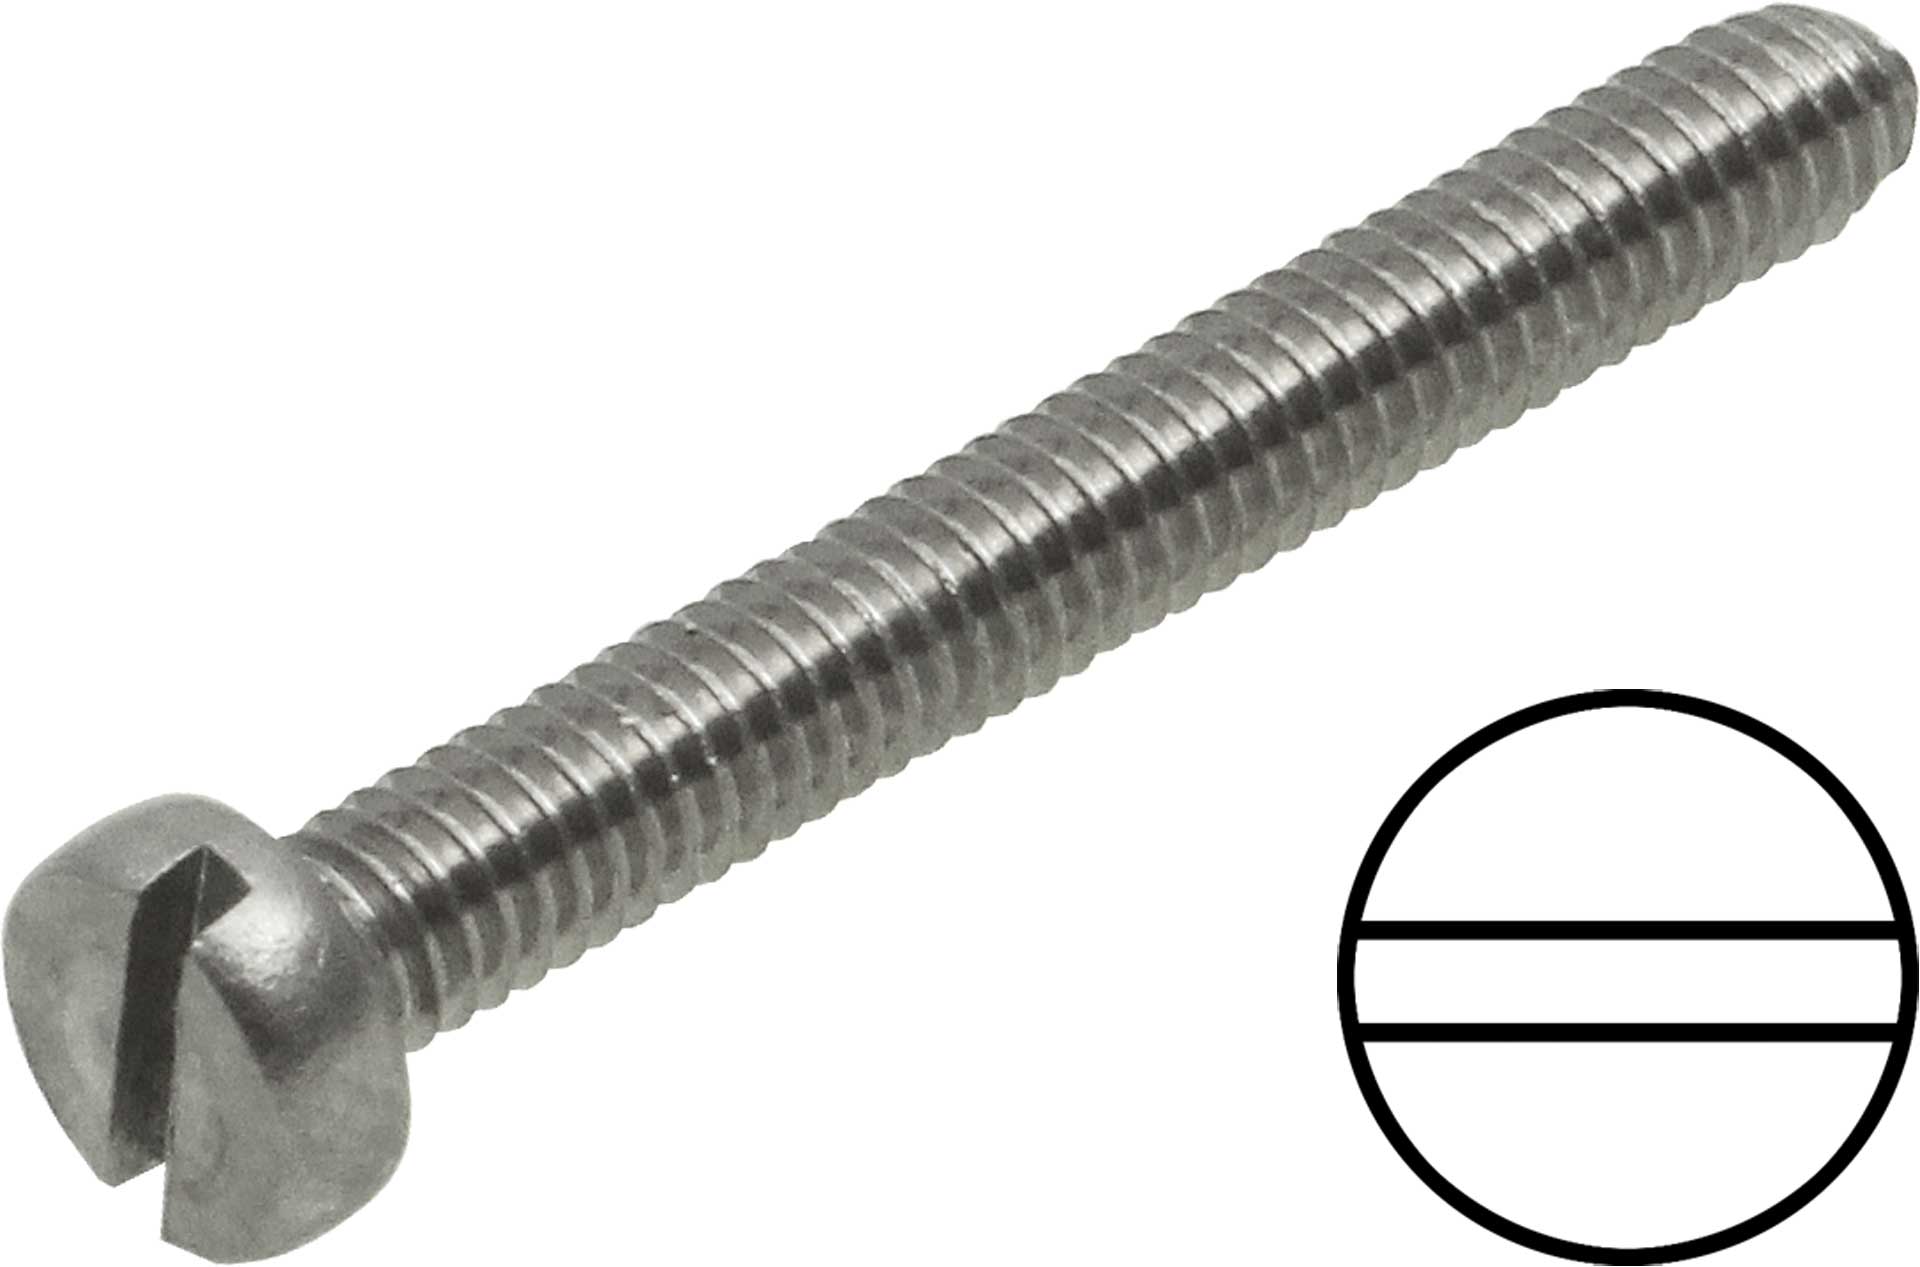 Modellbau Lindinger Cylinder head screws M3/10mm slotted Stainless steel, rustproof 20pcs.